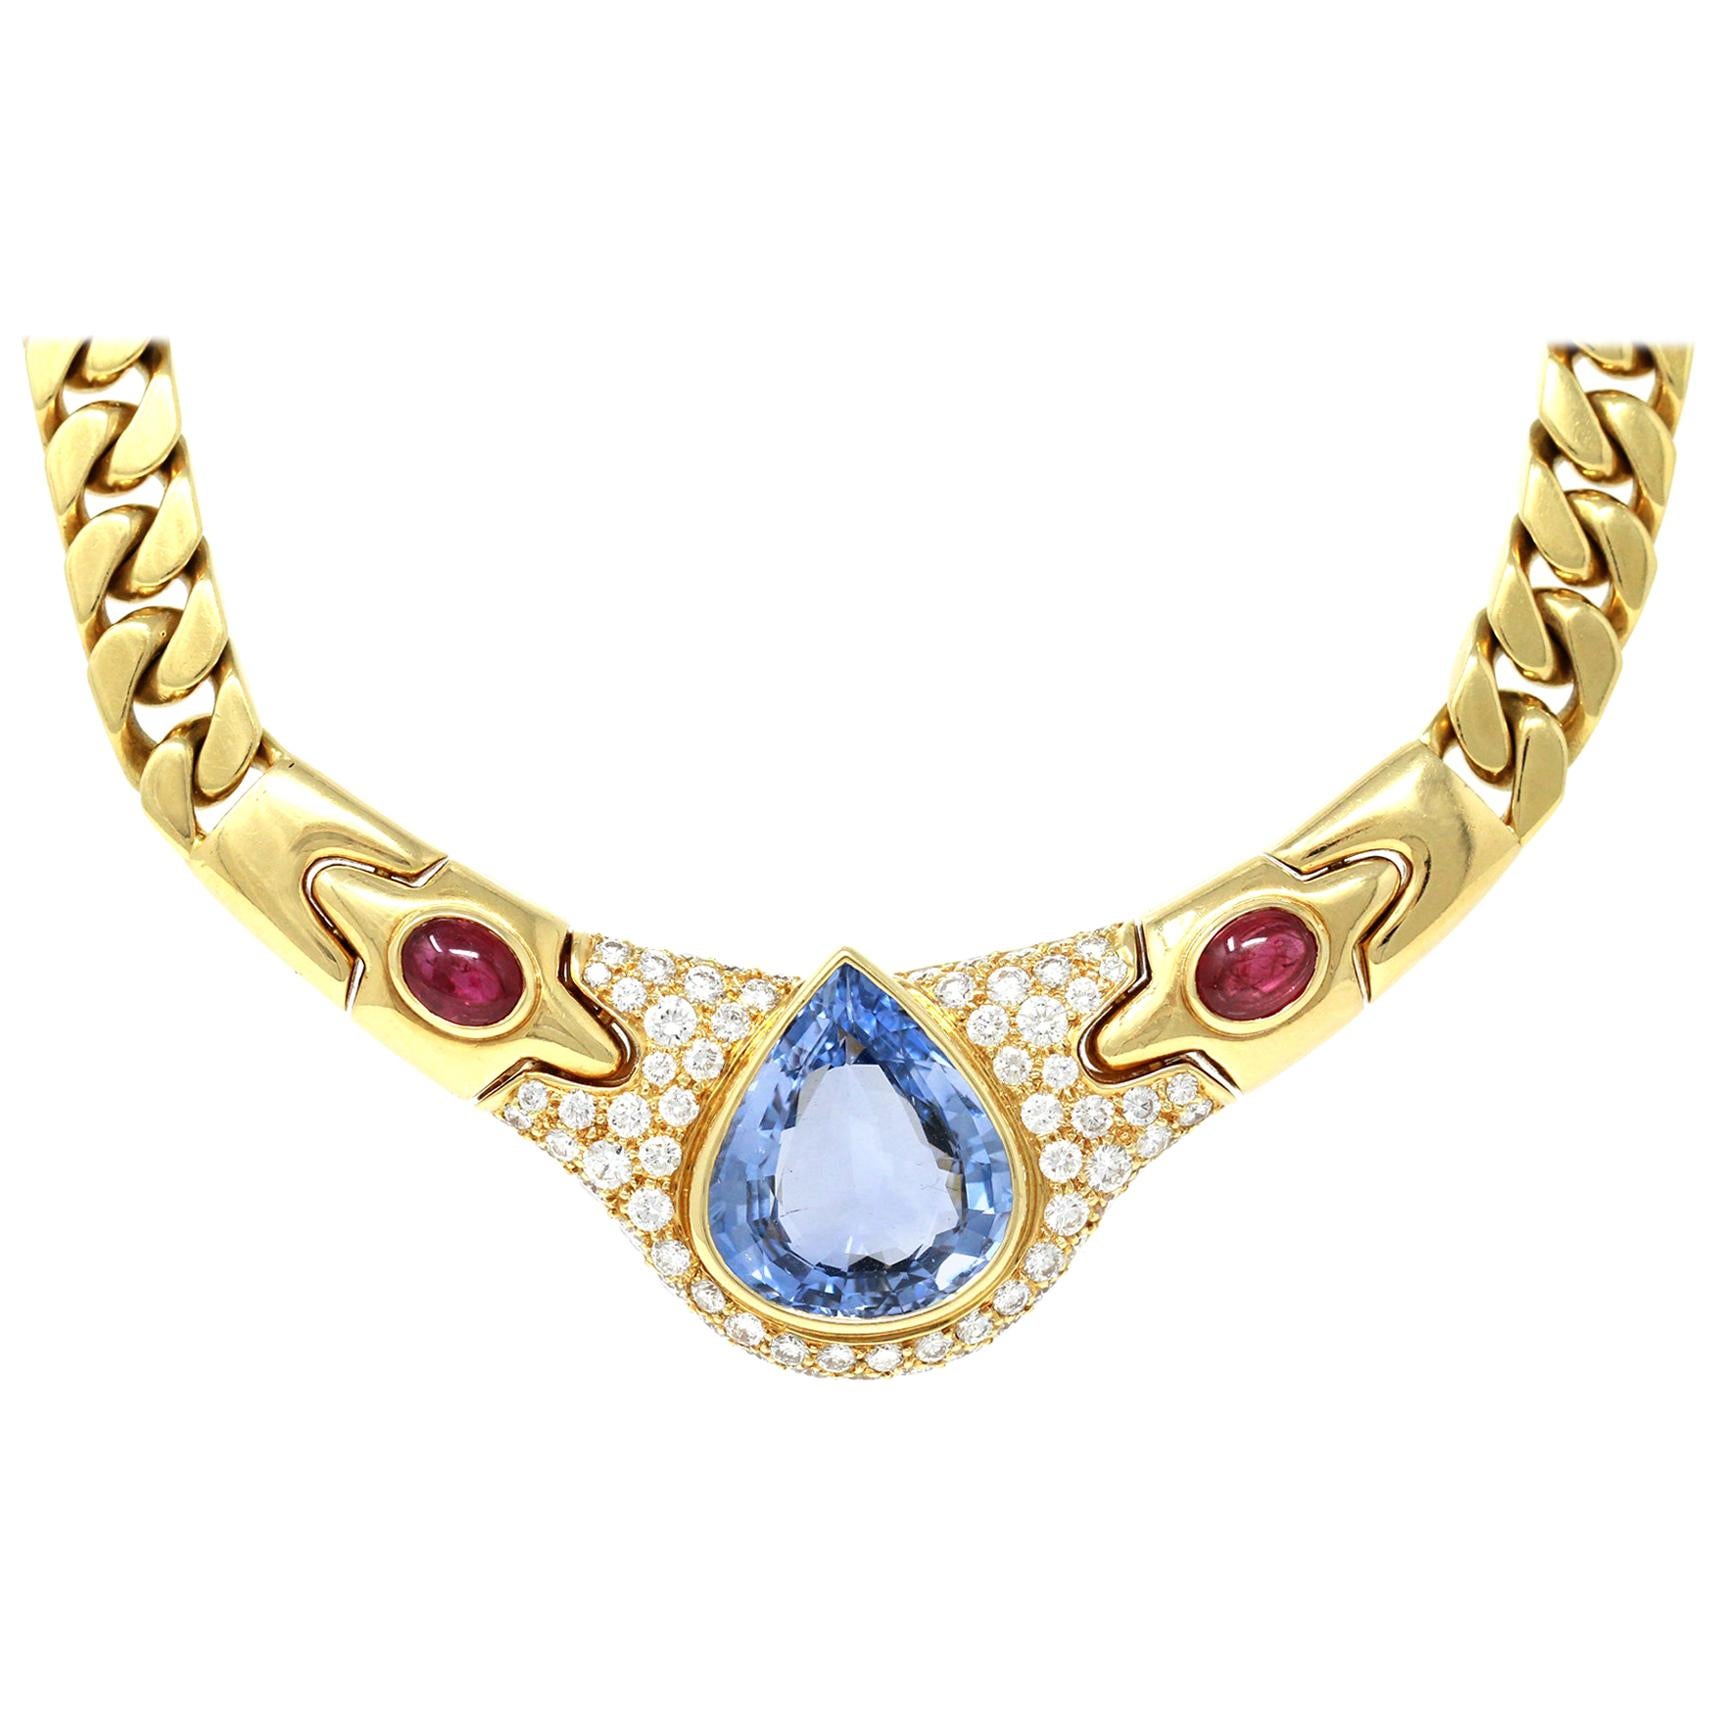 Bvlgari Pear-Shaped Ceylon Sapphire, Ruby and Diamond Necklace in 18 Karat Gold